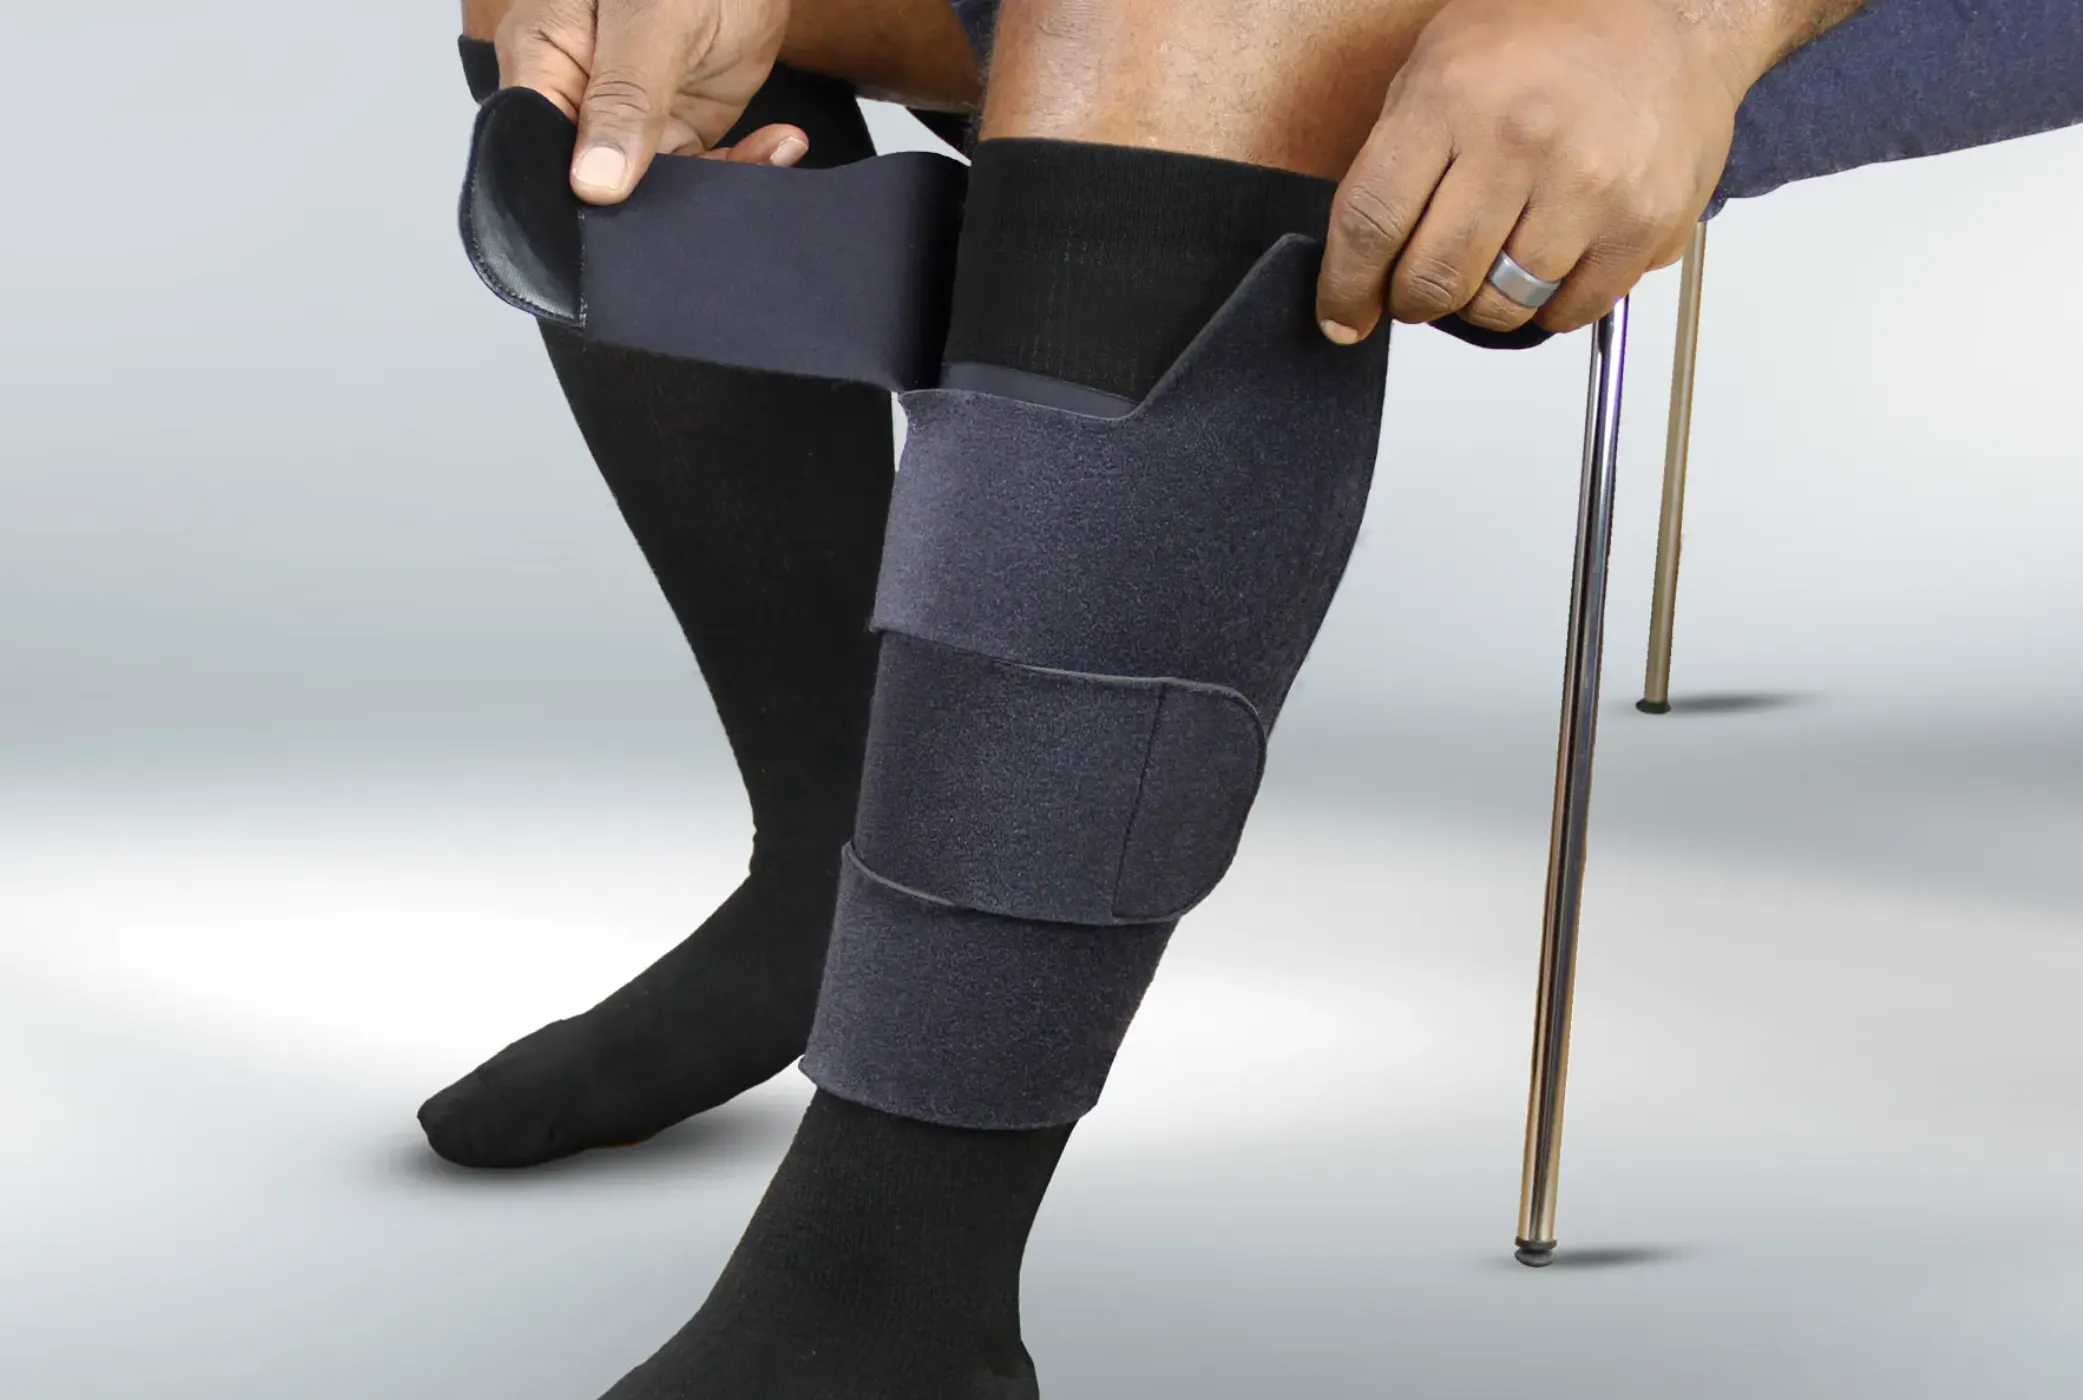 Thuasne Ease Adjust Compression Below Knee Wrap